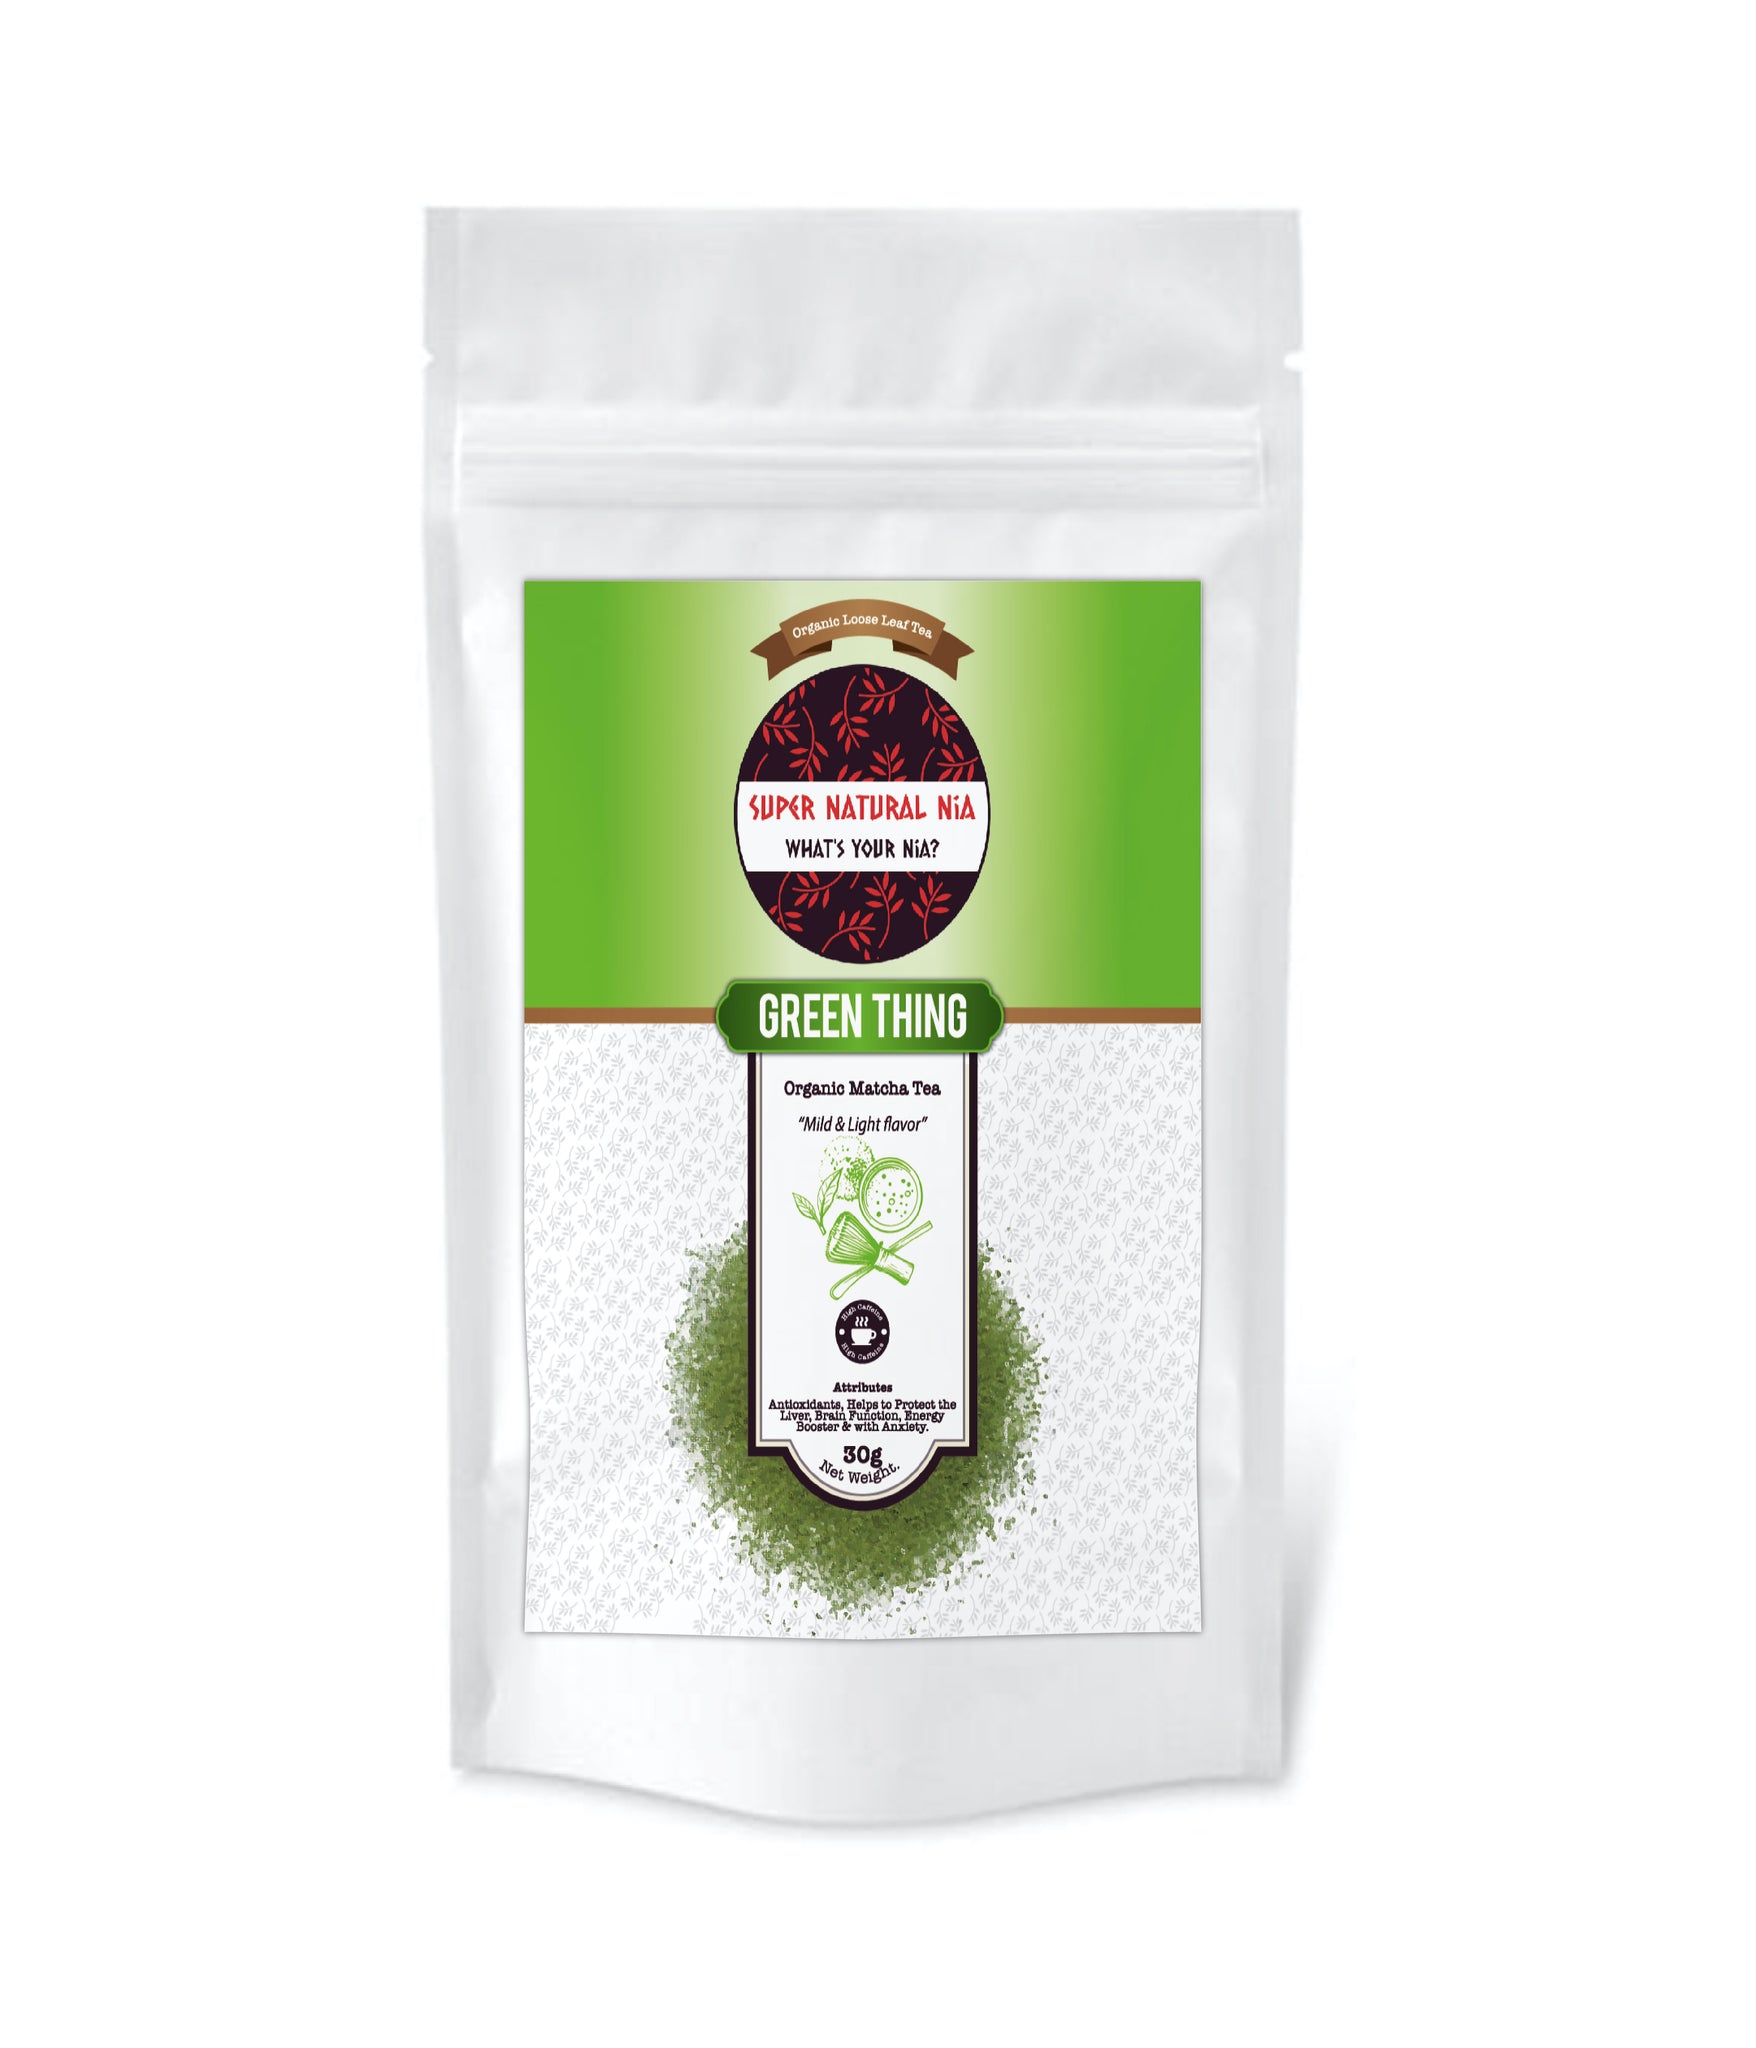 GREEN THING "Organic Green Matcha Powdered Tea"